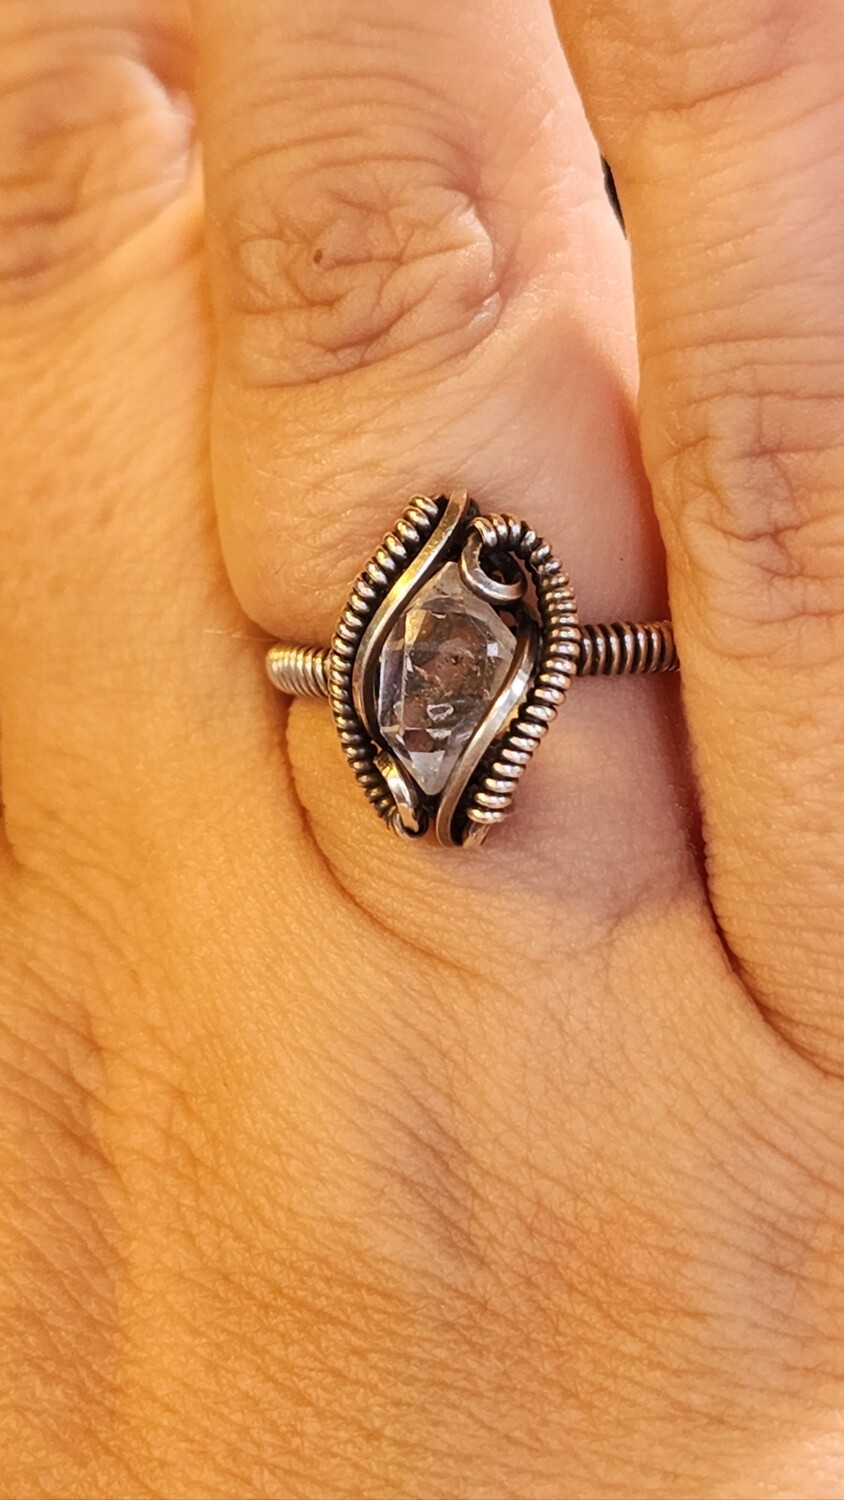 Herkimer diamond ring size 8